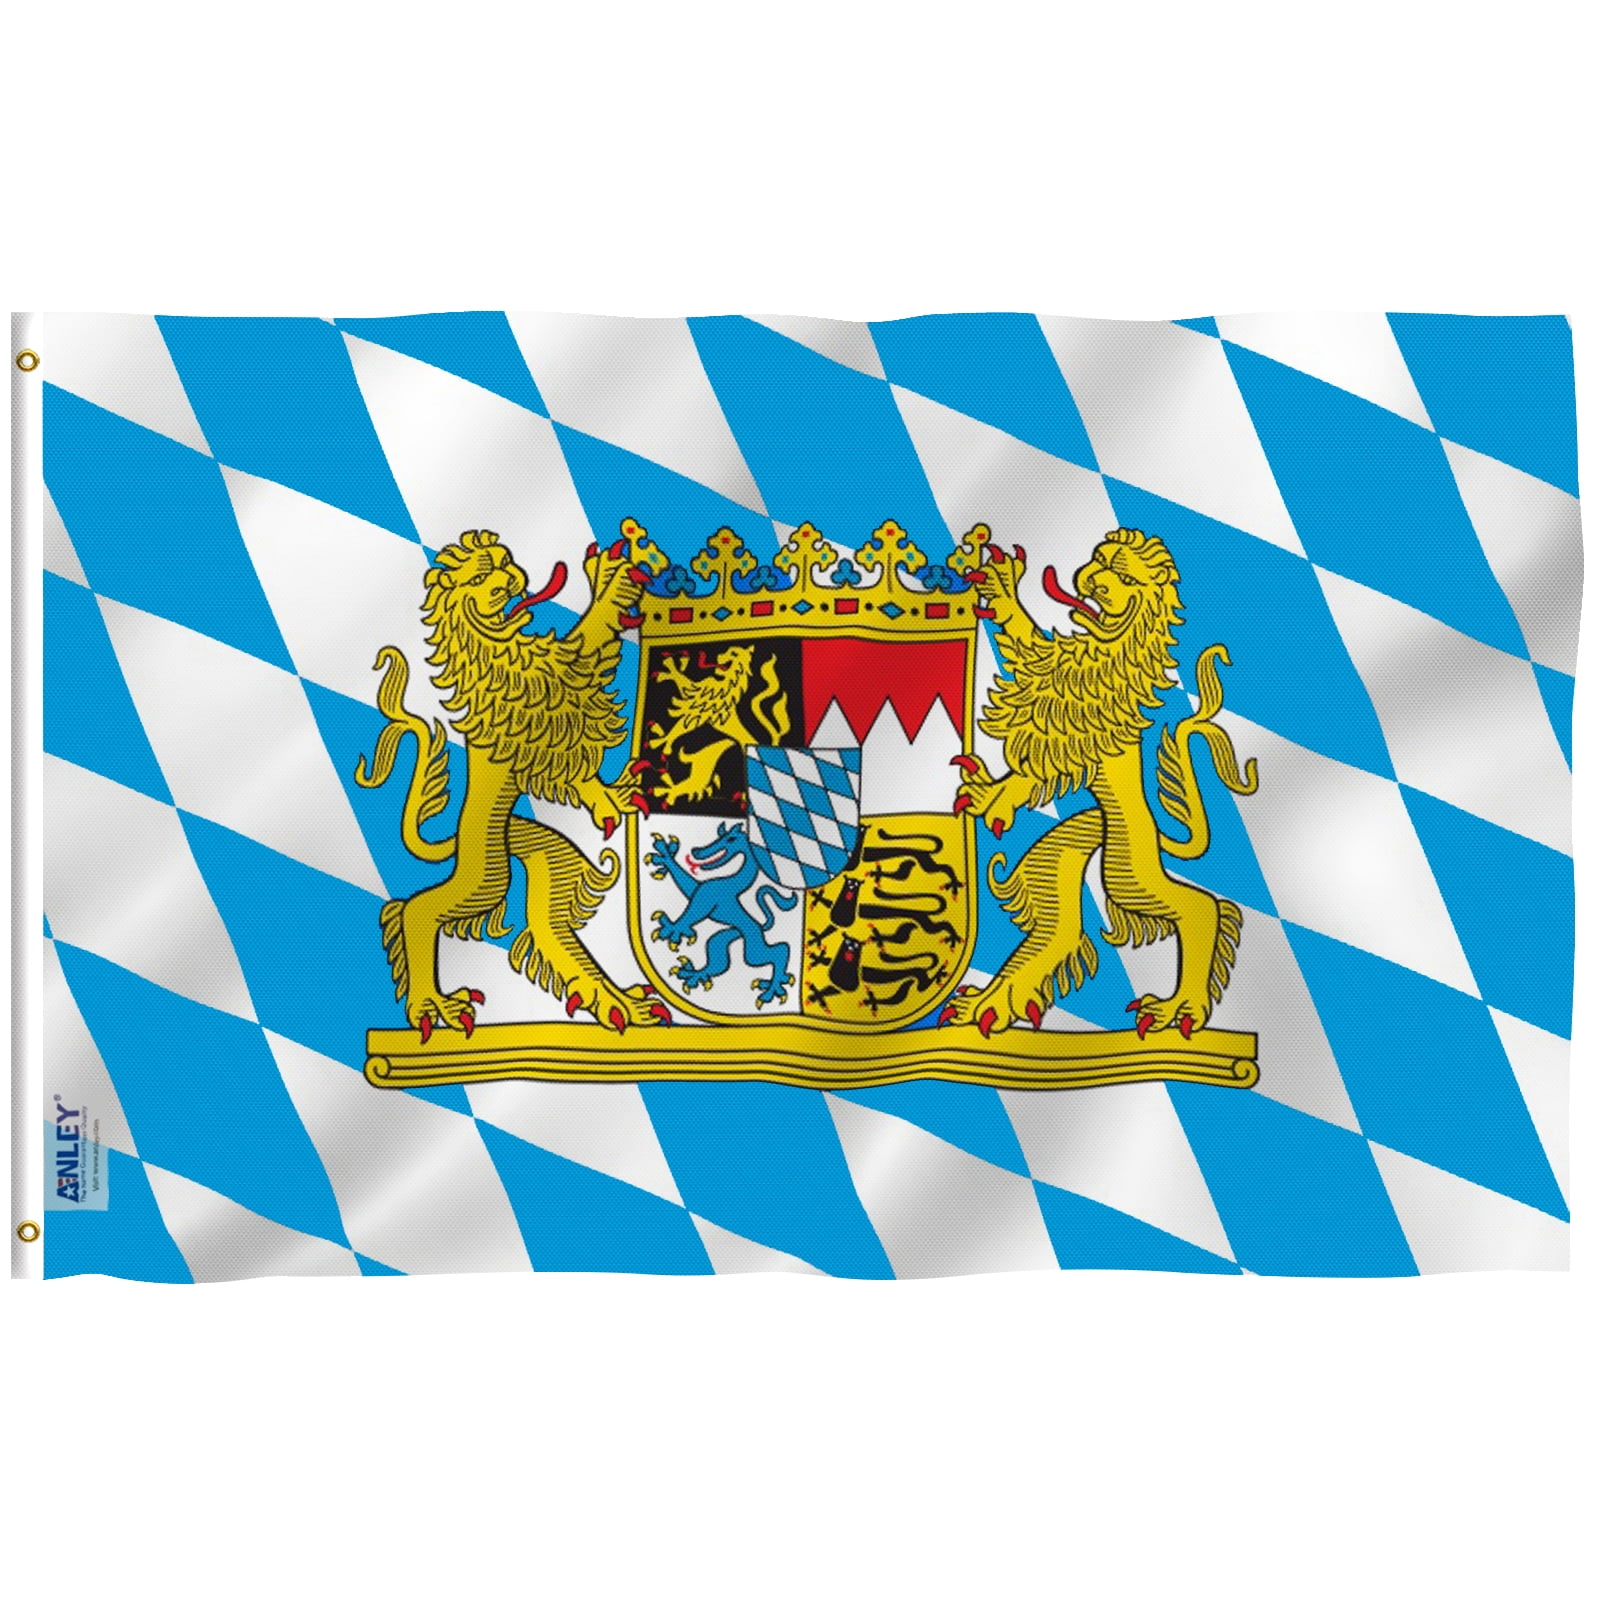 Bavaria Crest Flag 5 x 3 FT 100% Polyester Germany Province Oc 